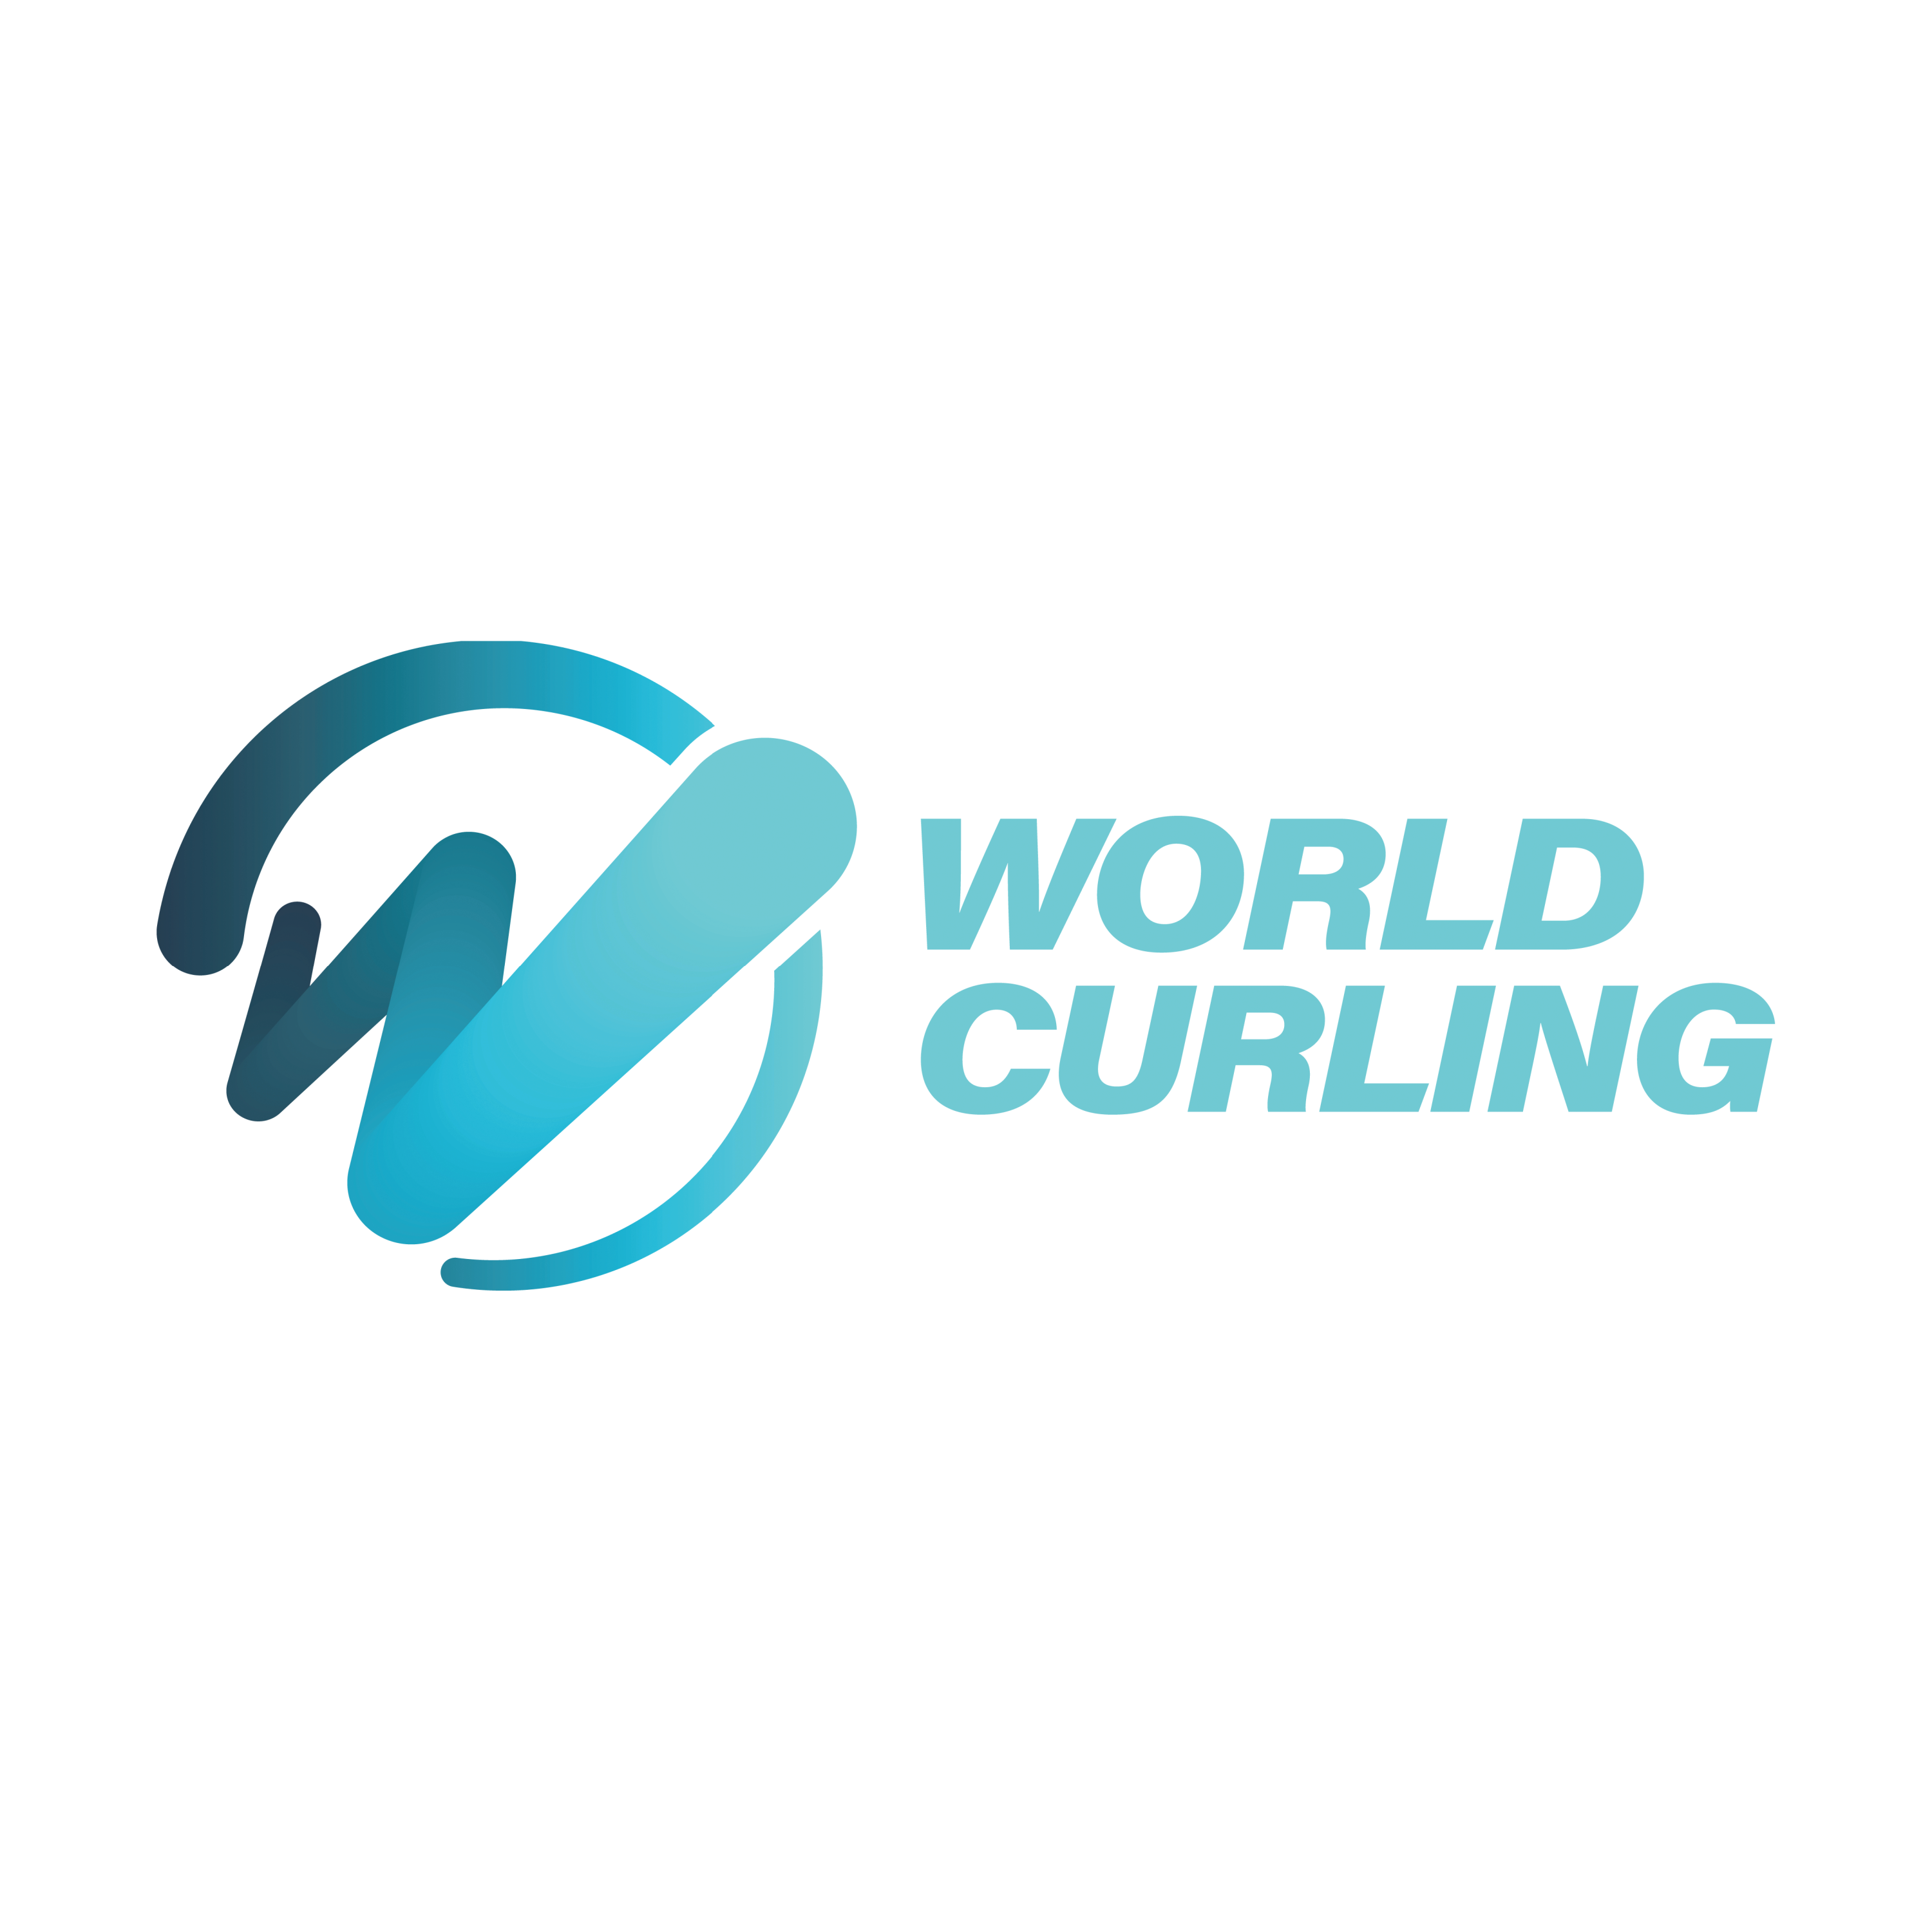 World Curling Transparent Picture